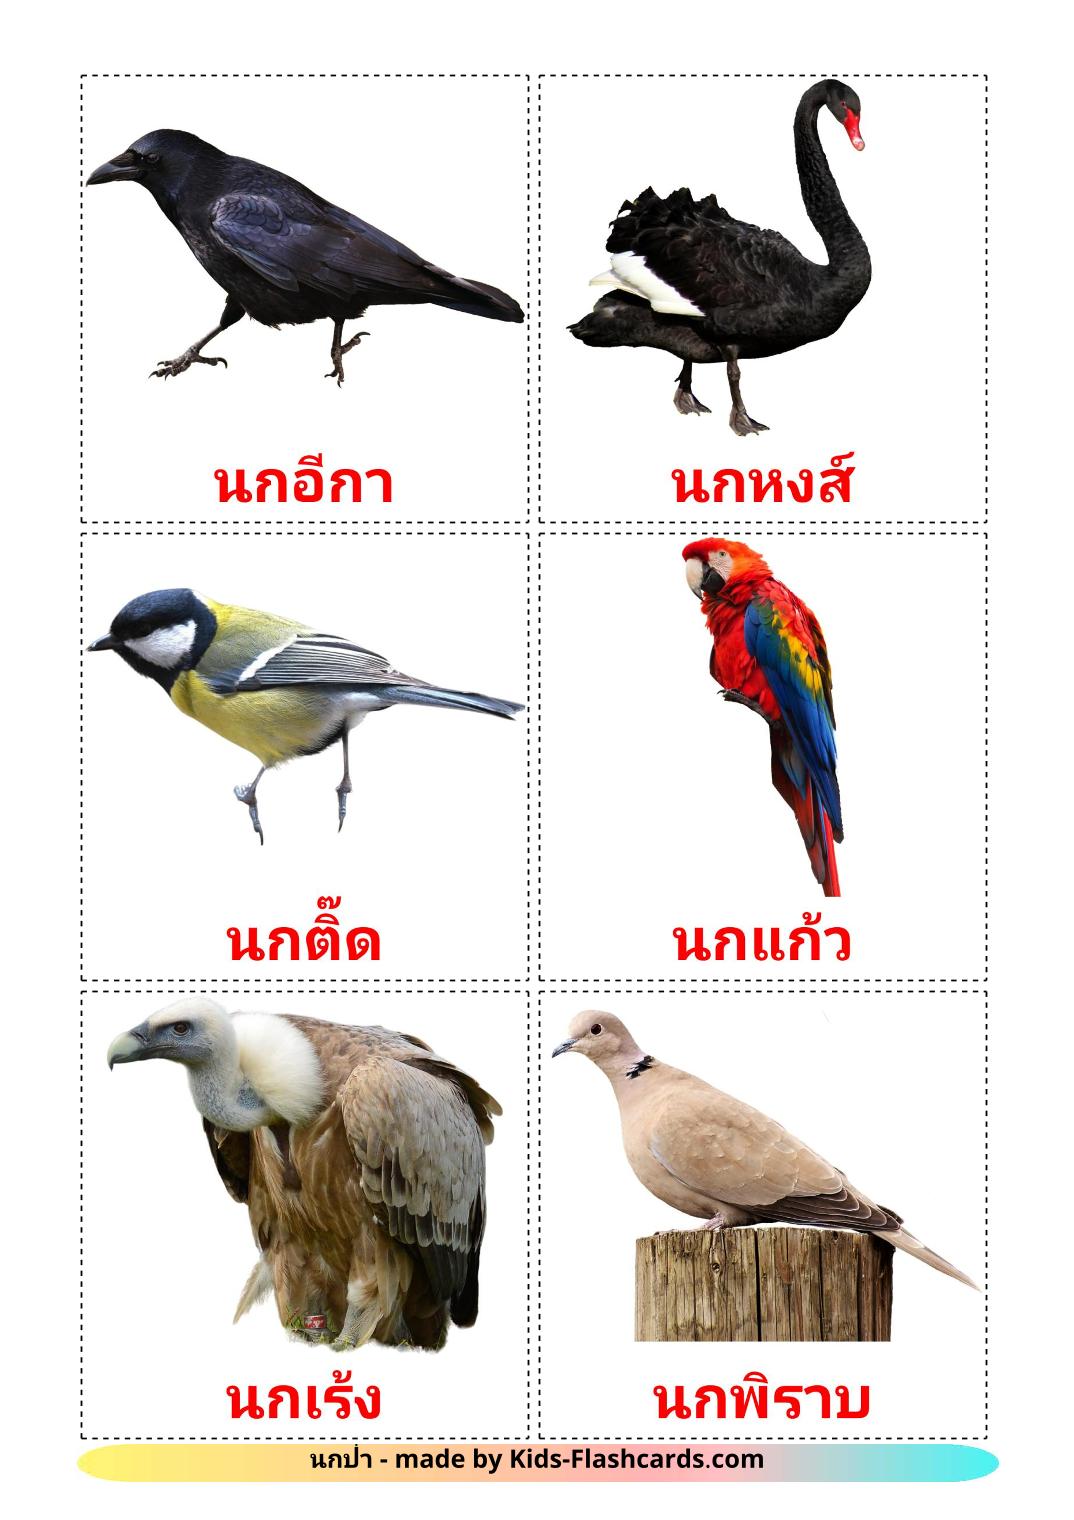 Pájaros salvajes - 18 fichas de tailandés para imprimir gratis 